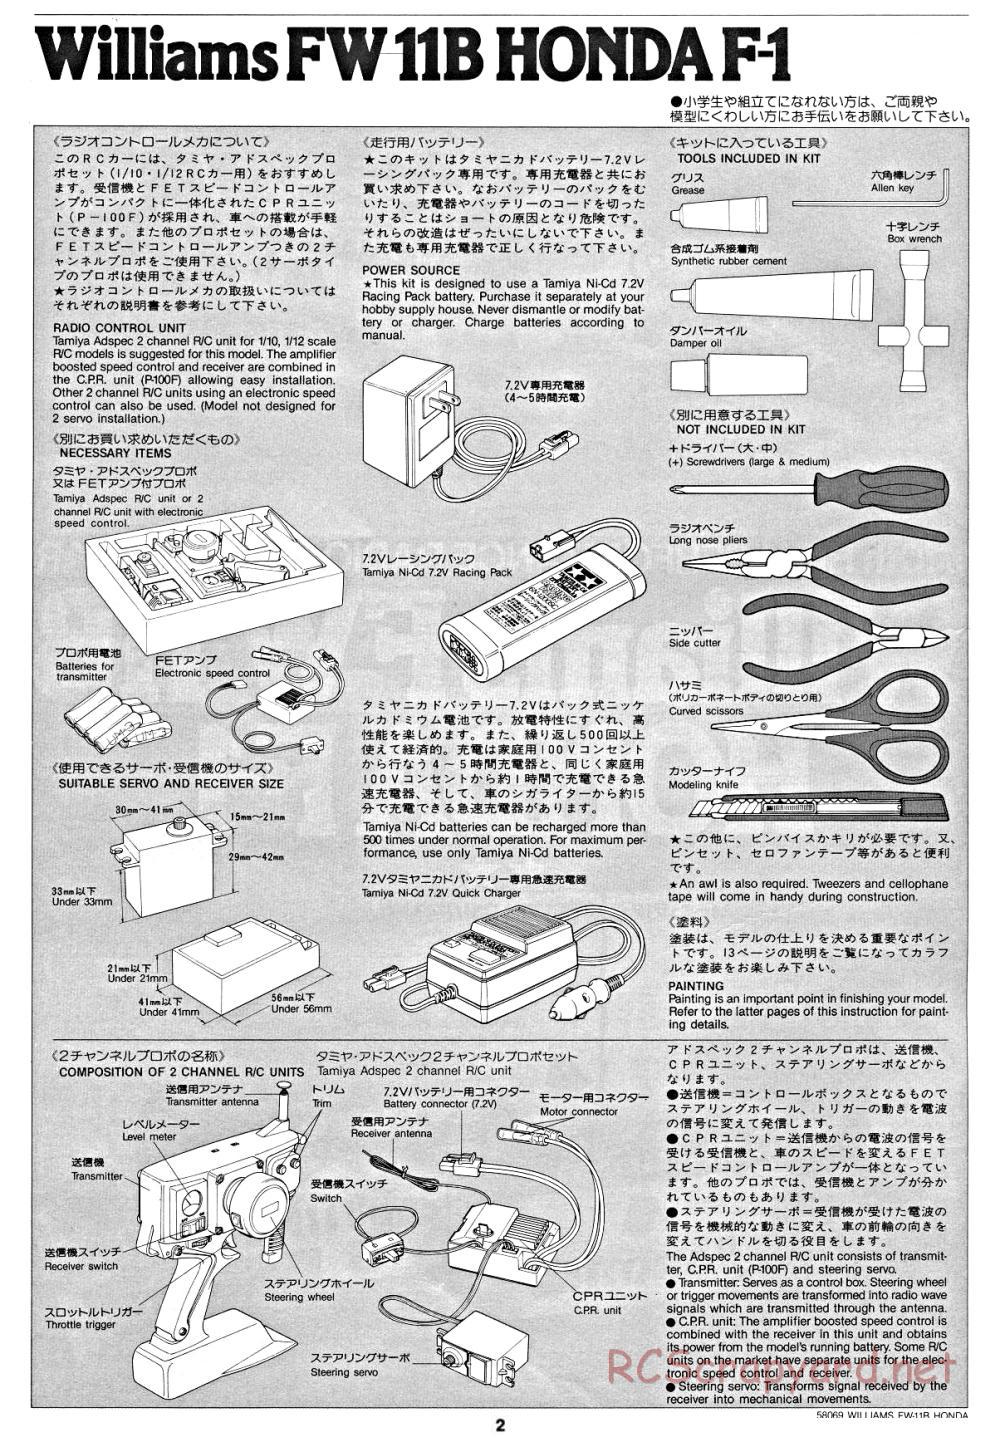 Tamiya - Williams FW-11B Honda F1 - 58069 - Manual - Page 2